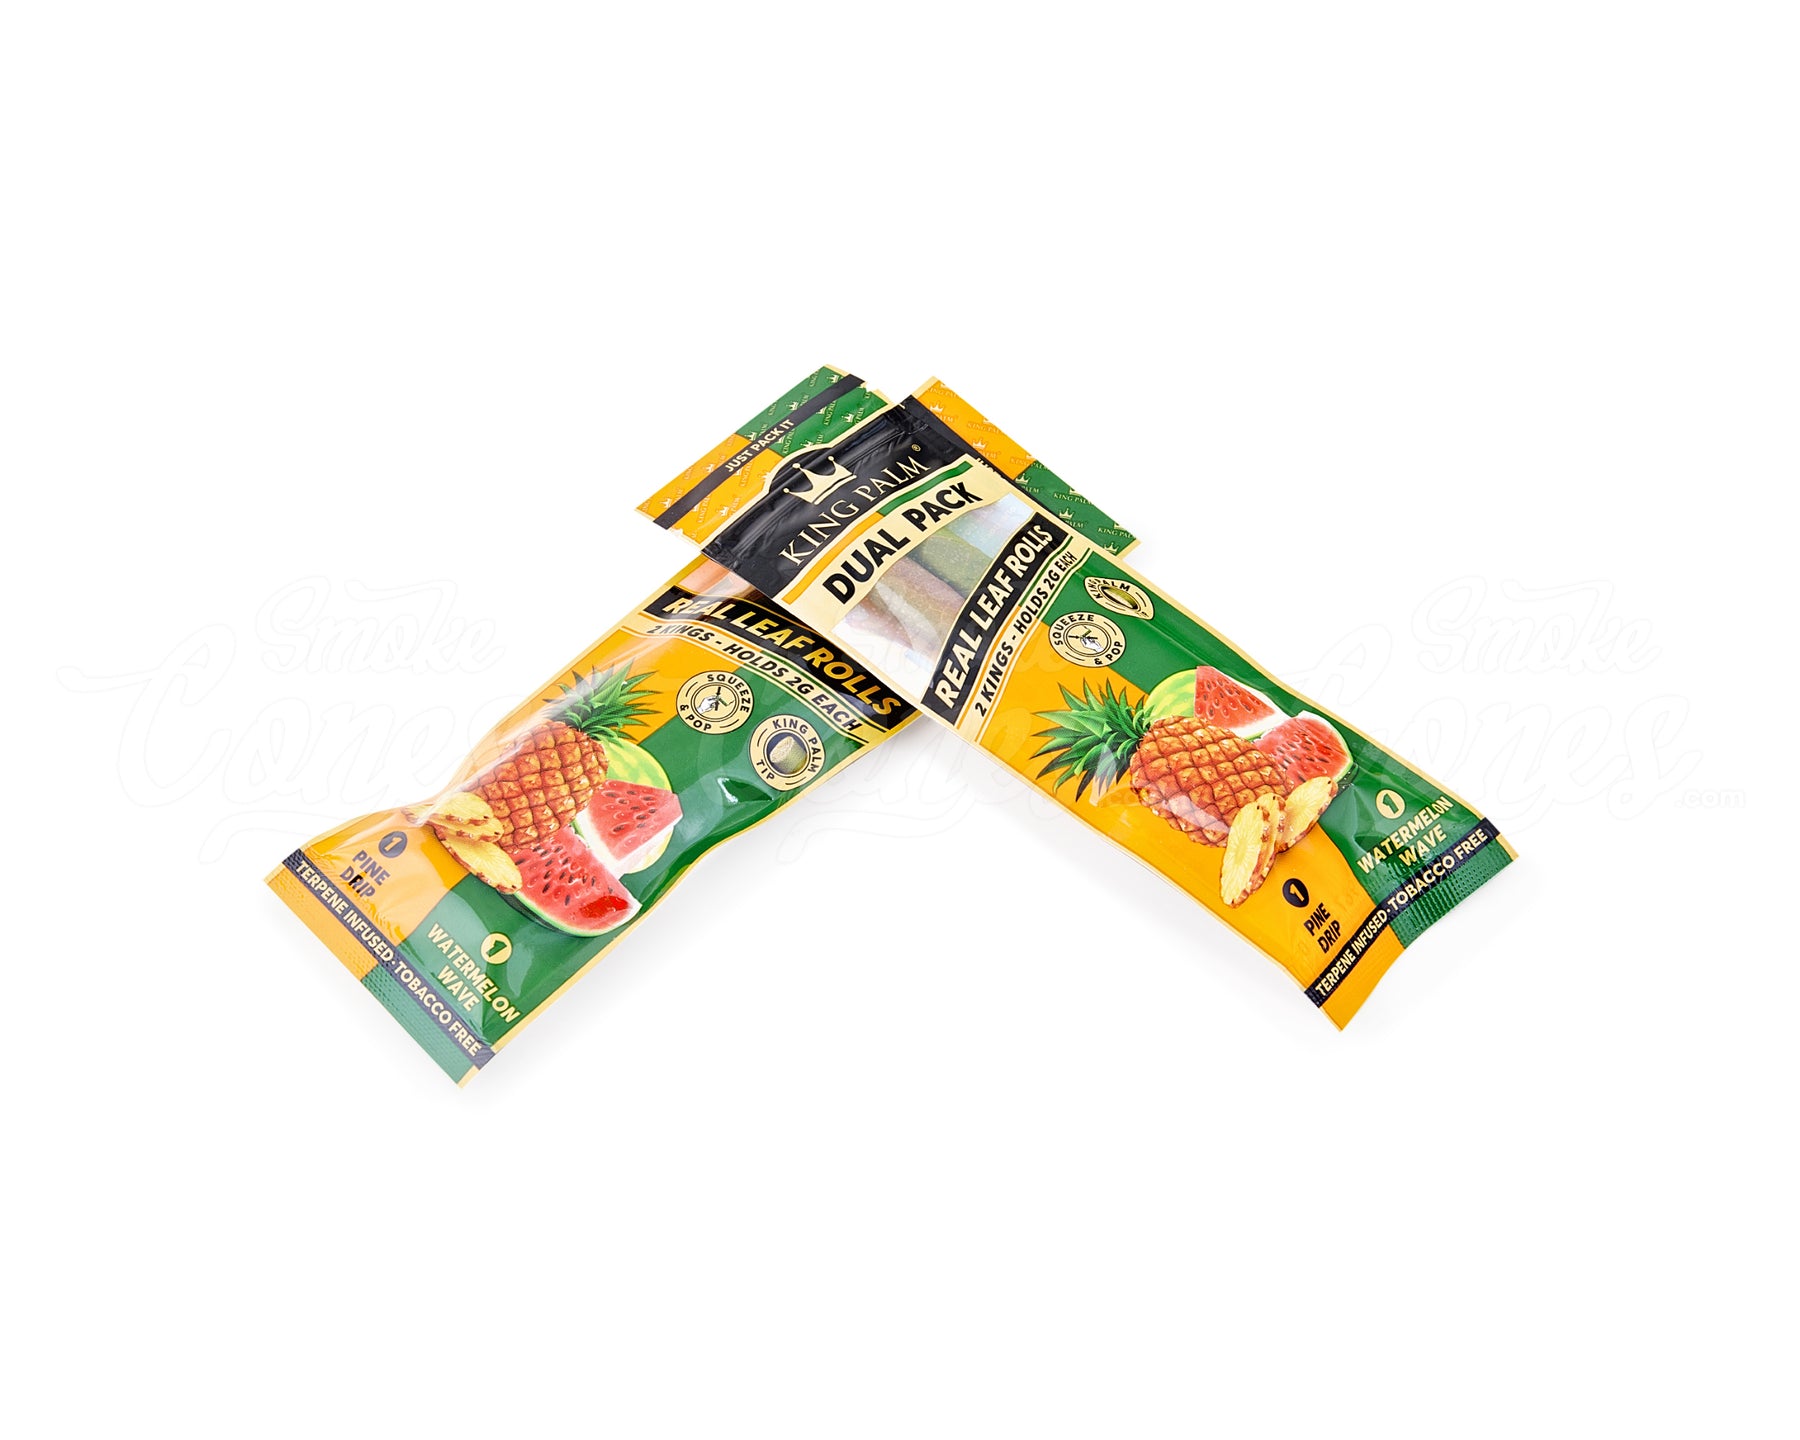 King Palm Pine Drip/Watermelon Flavor Natural Leaf Dual Blunt Wraps 20/Box